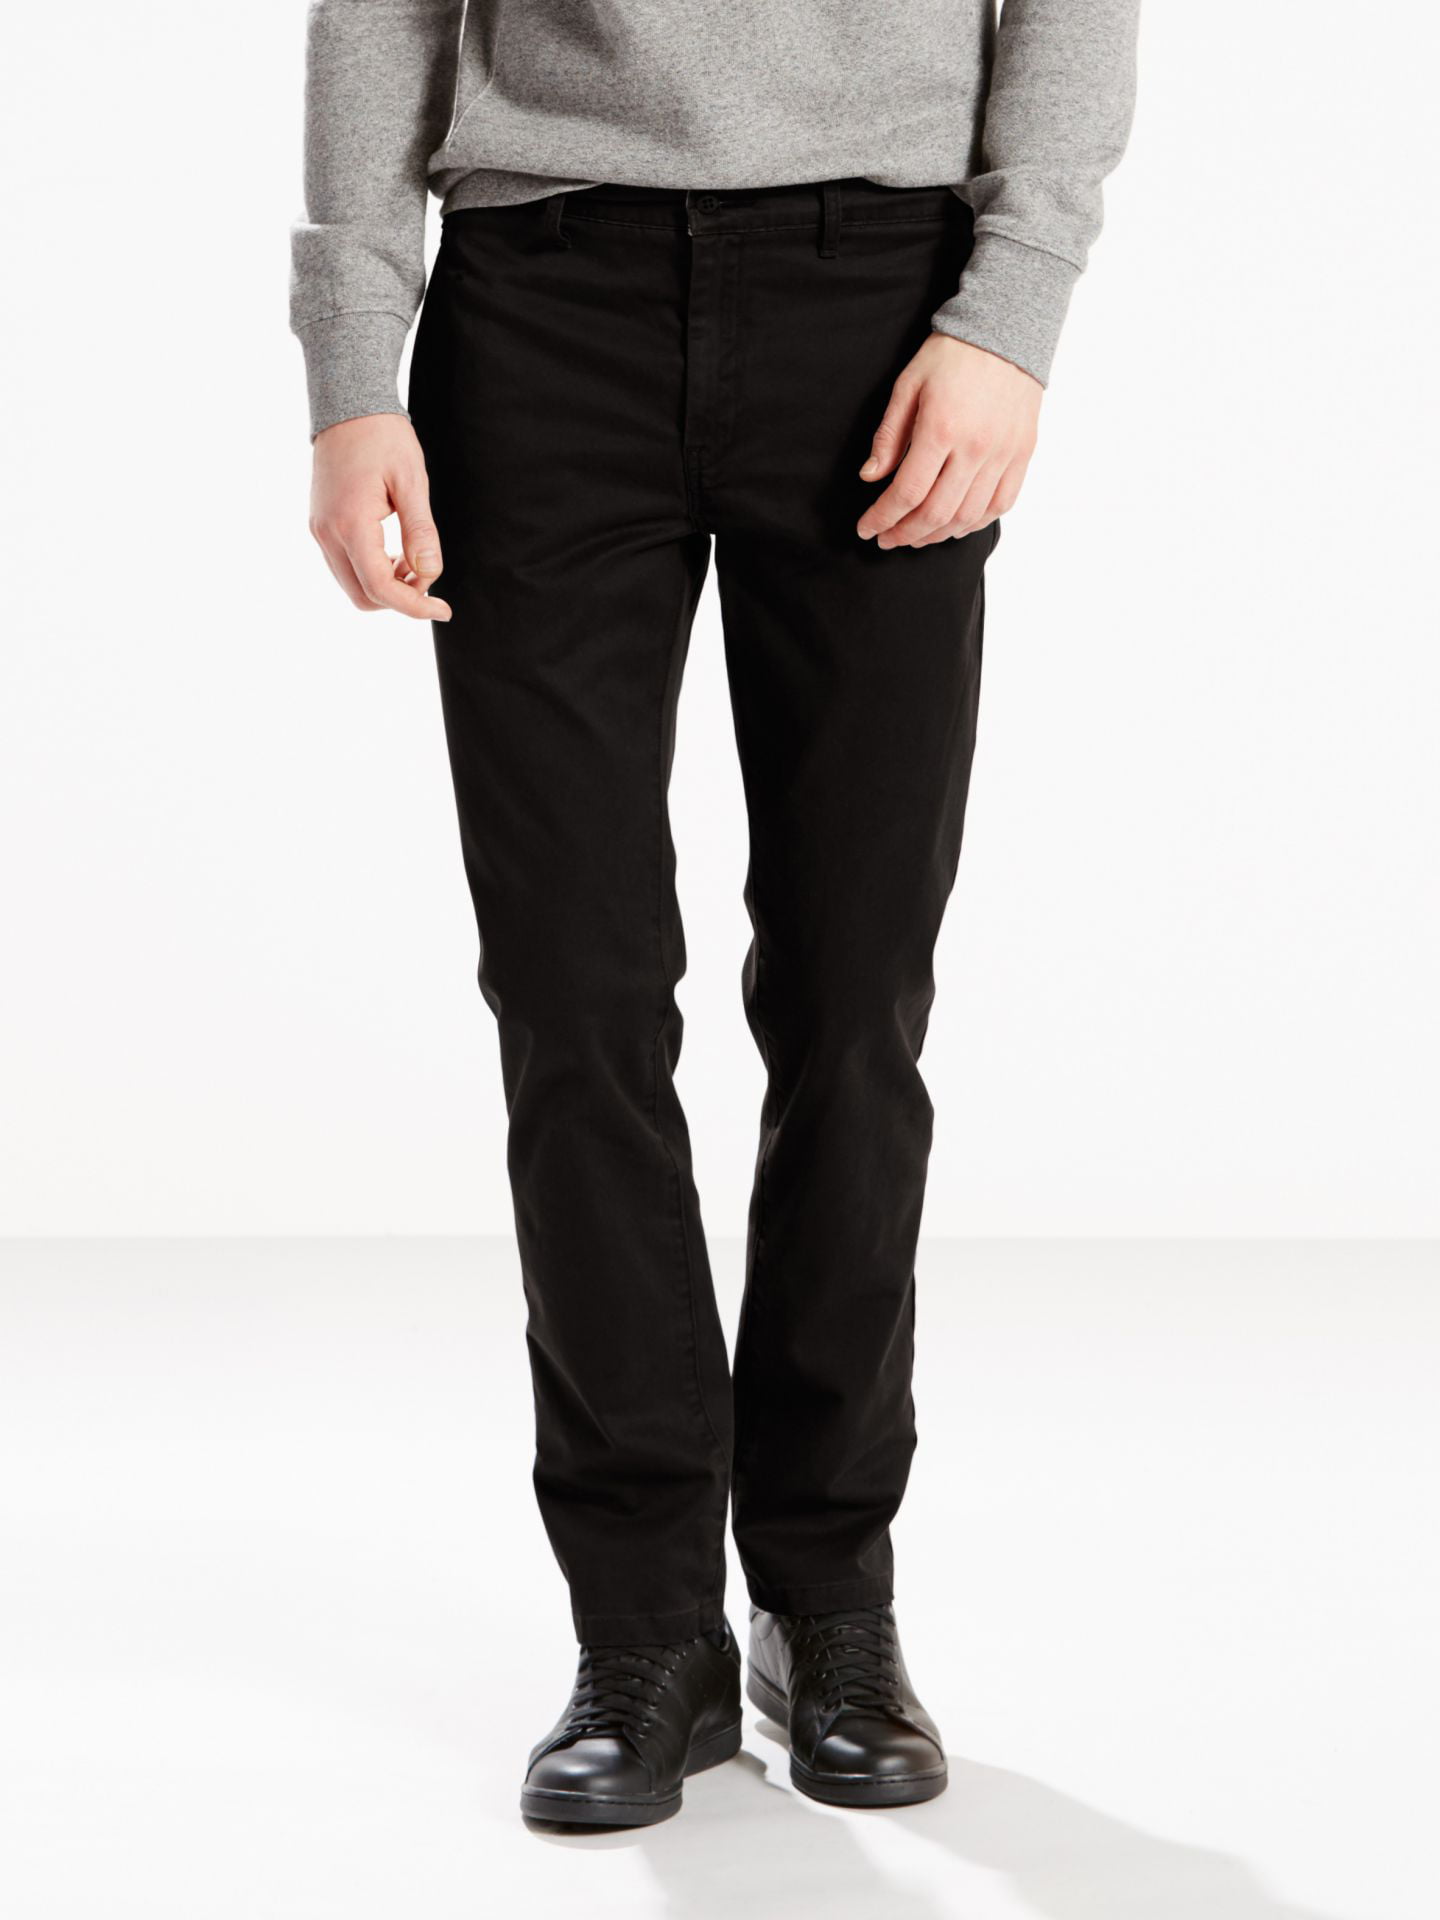 Levi's Men's 511 Slim Fit Chino Pants - Black, Black, 32X32 